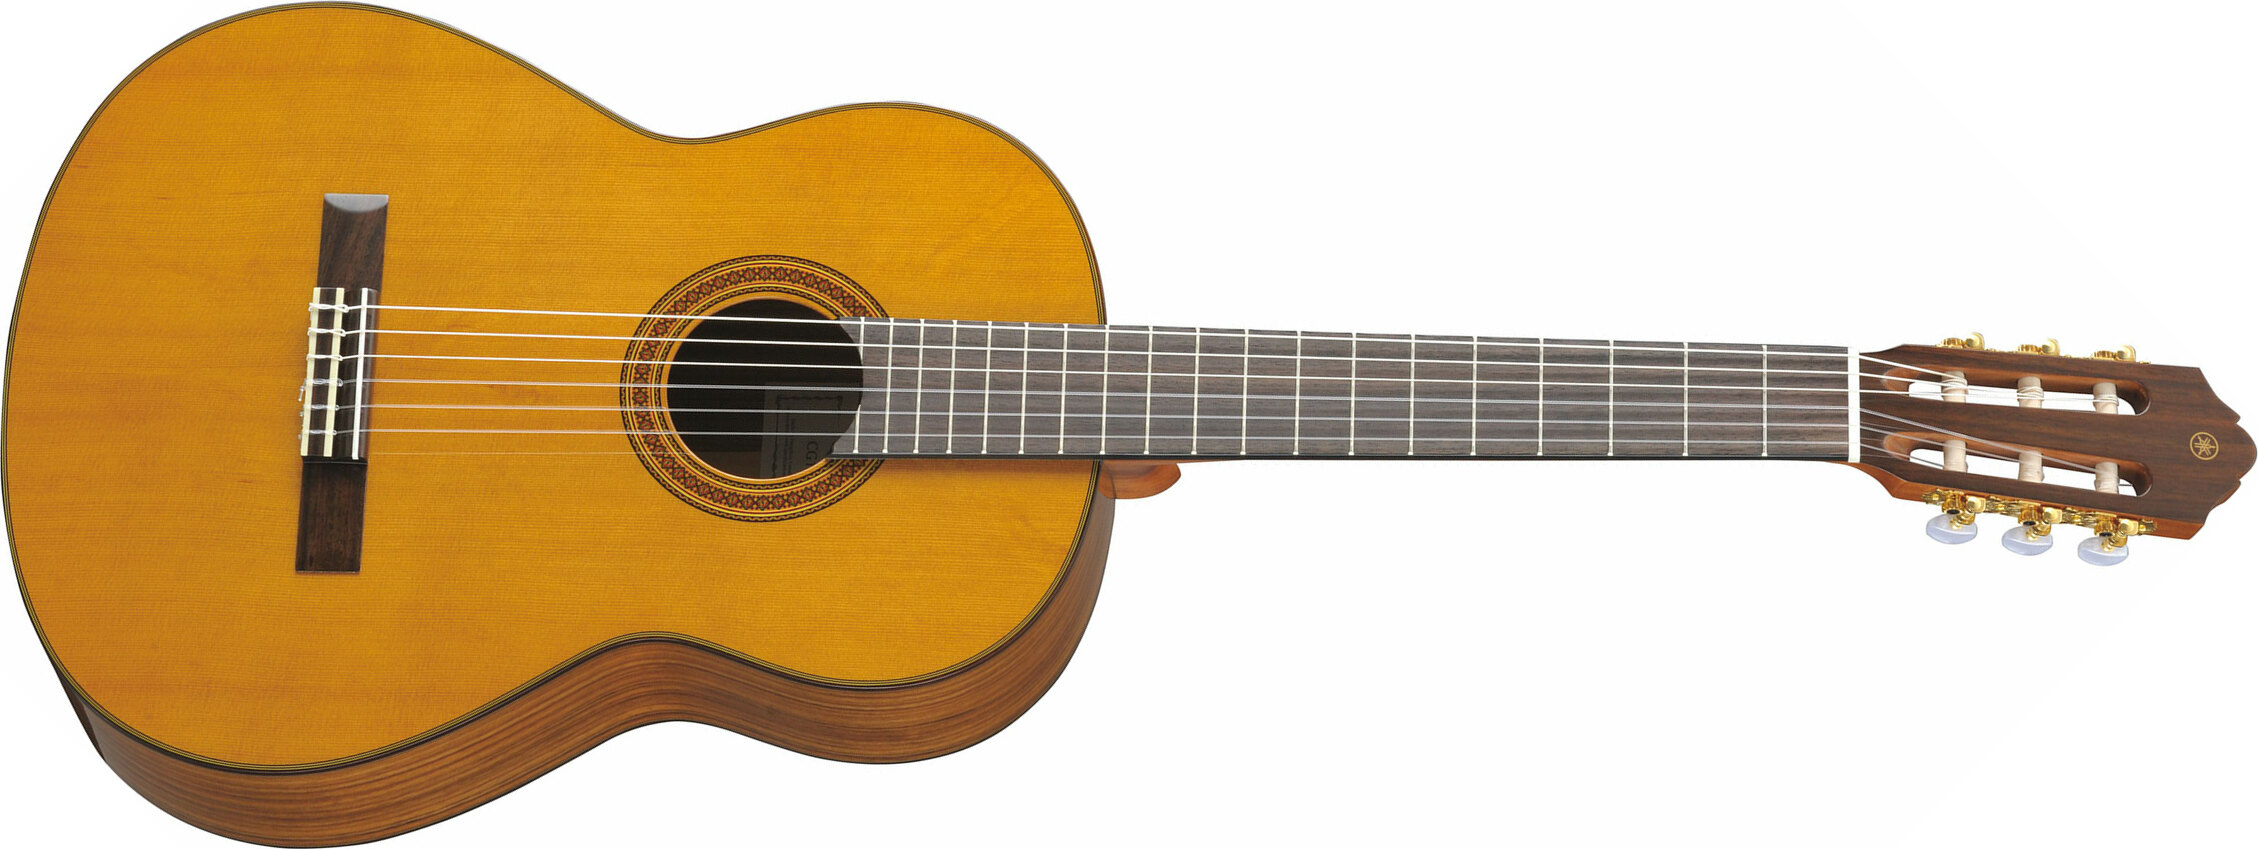 Yamaha Cg162c 4/4 Cedre Ovangkol Rw - Natural - Classical guitar 4/4 size - Main picture